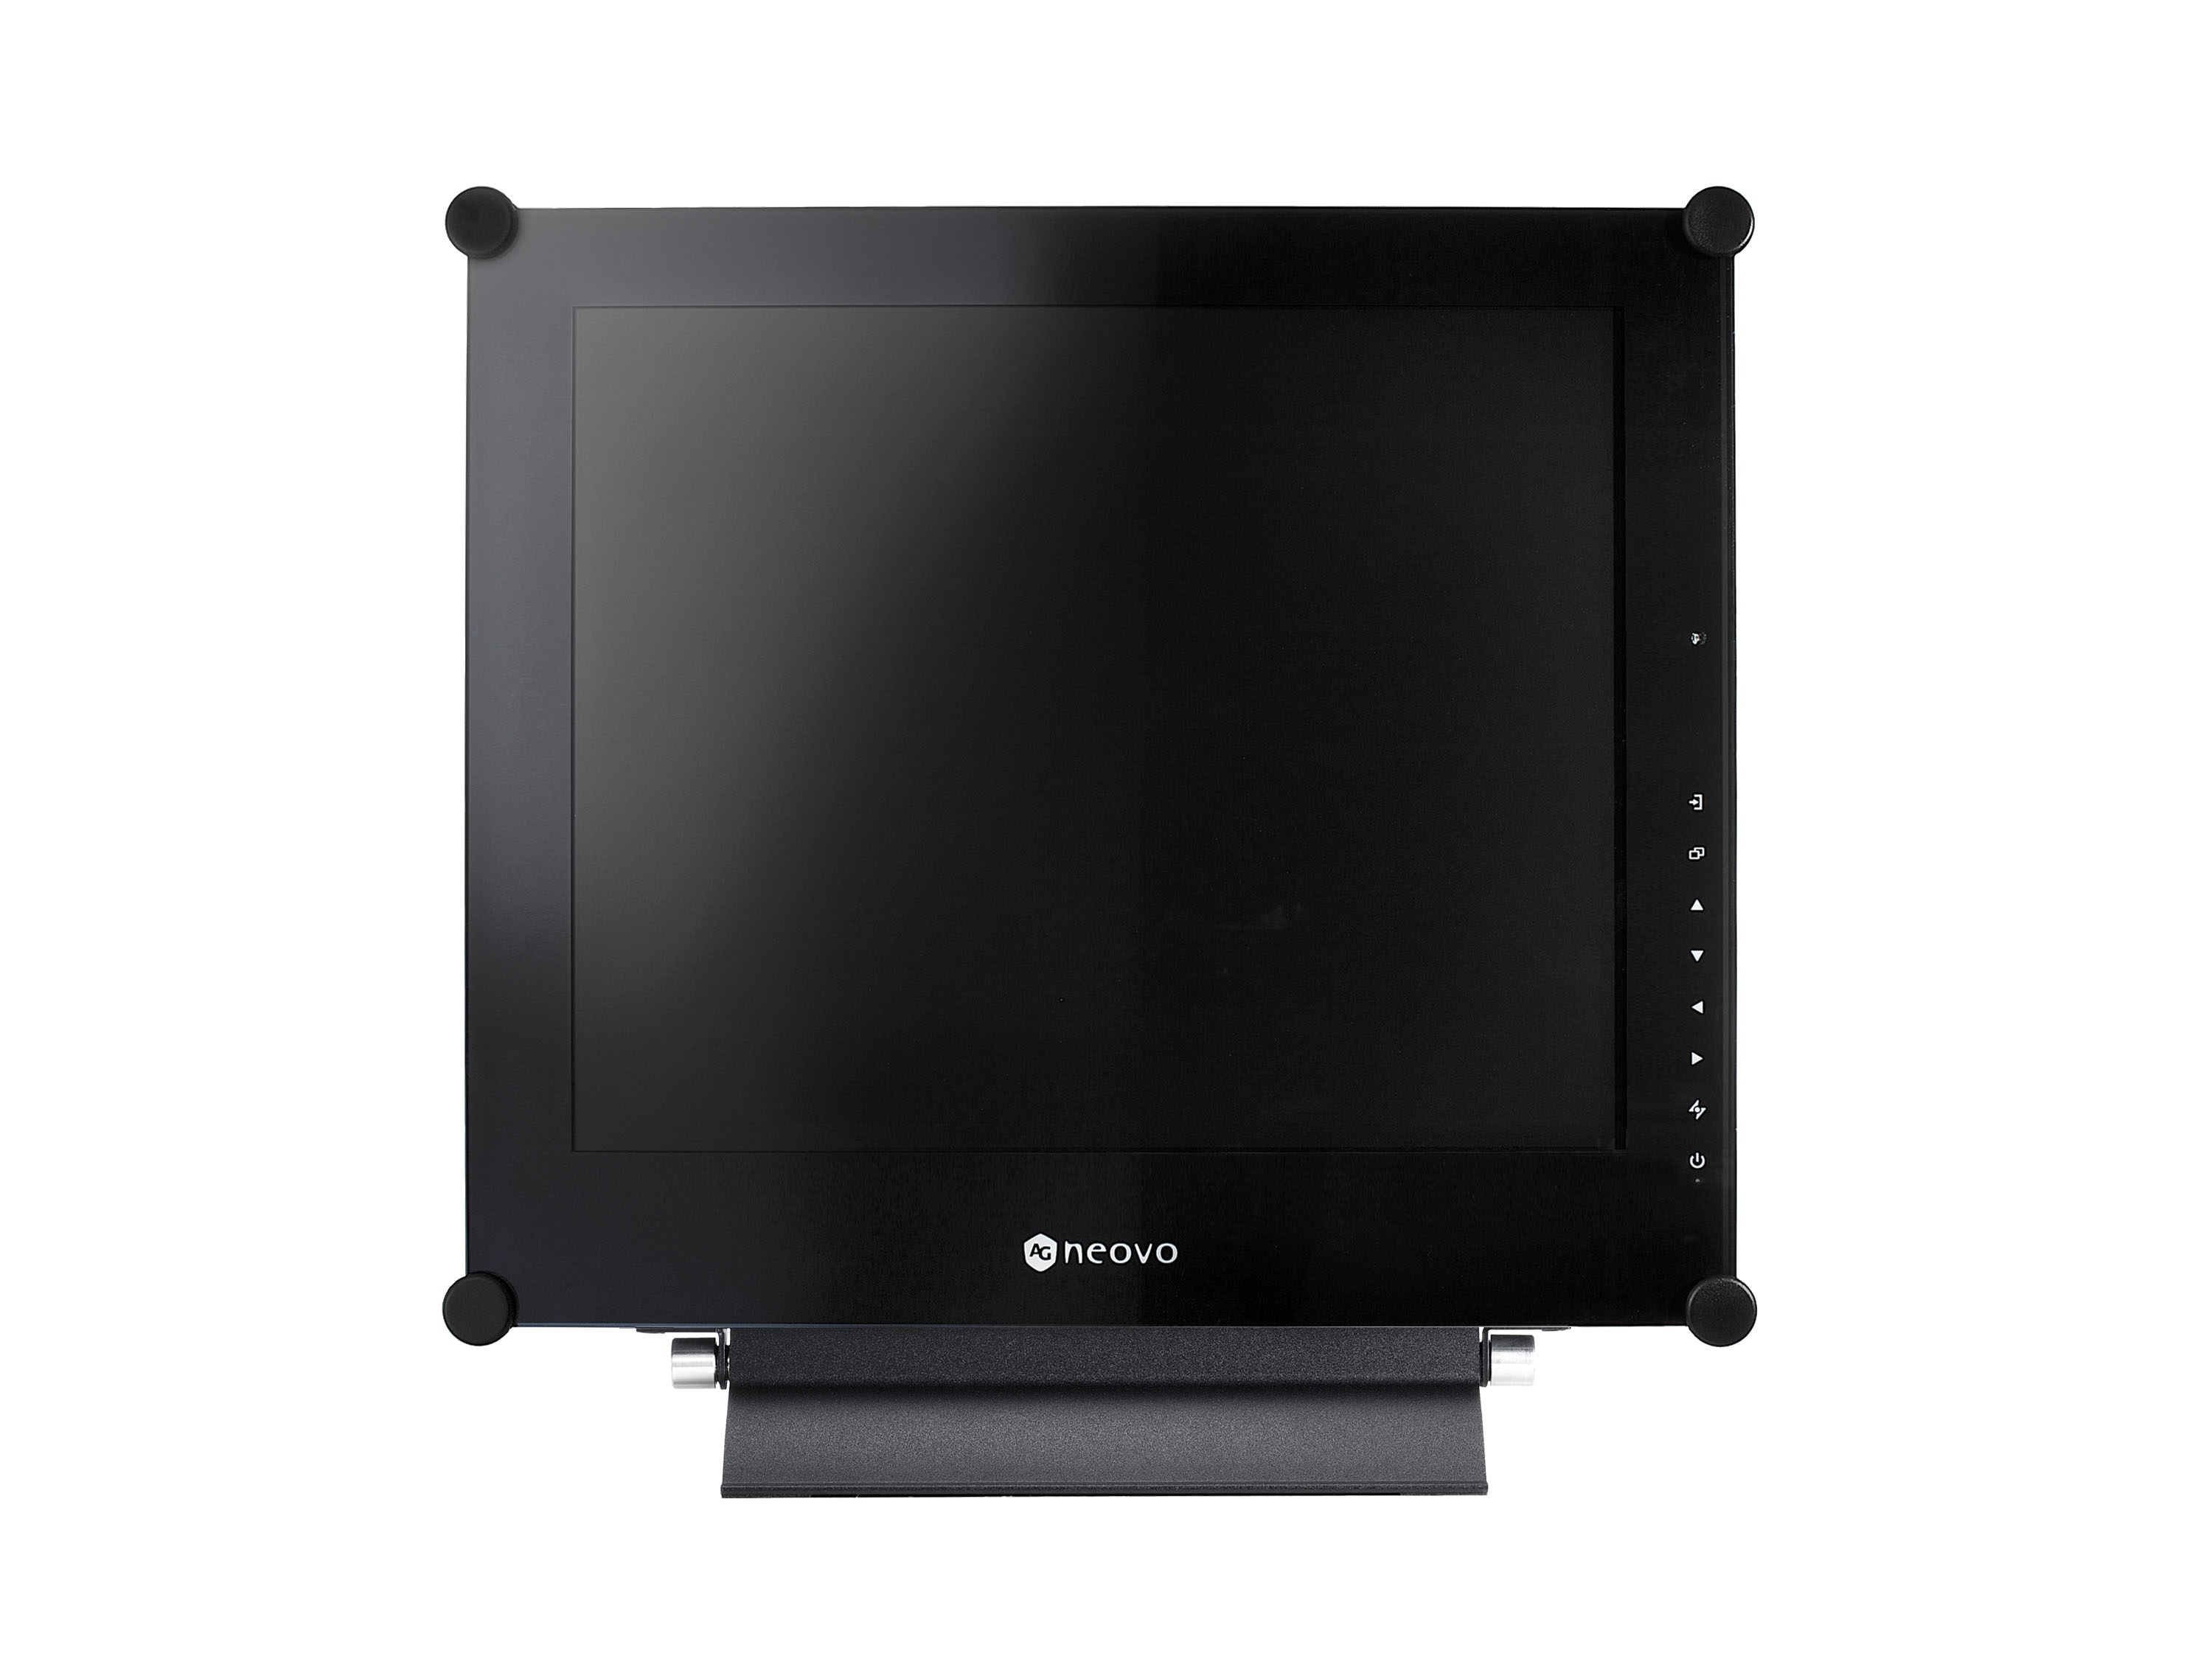 SX-17G 17-inch 5x4 Surveillance Monitor by AG Neovo